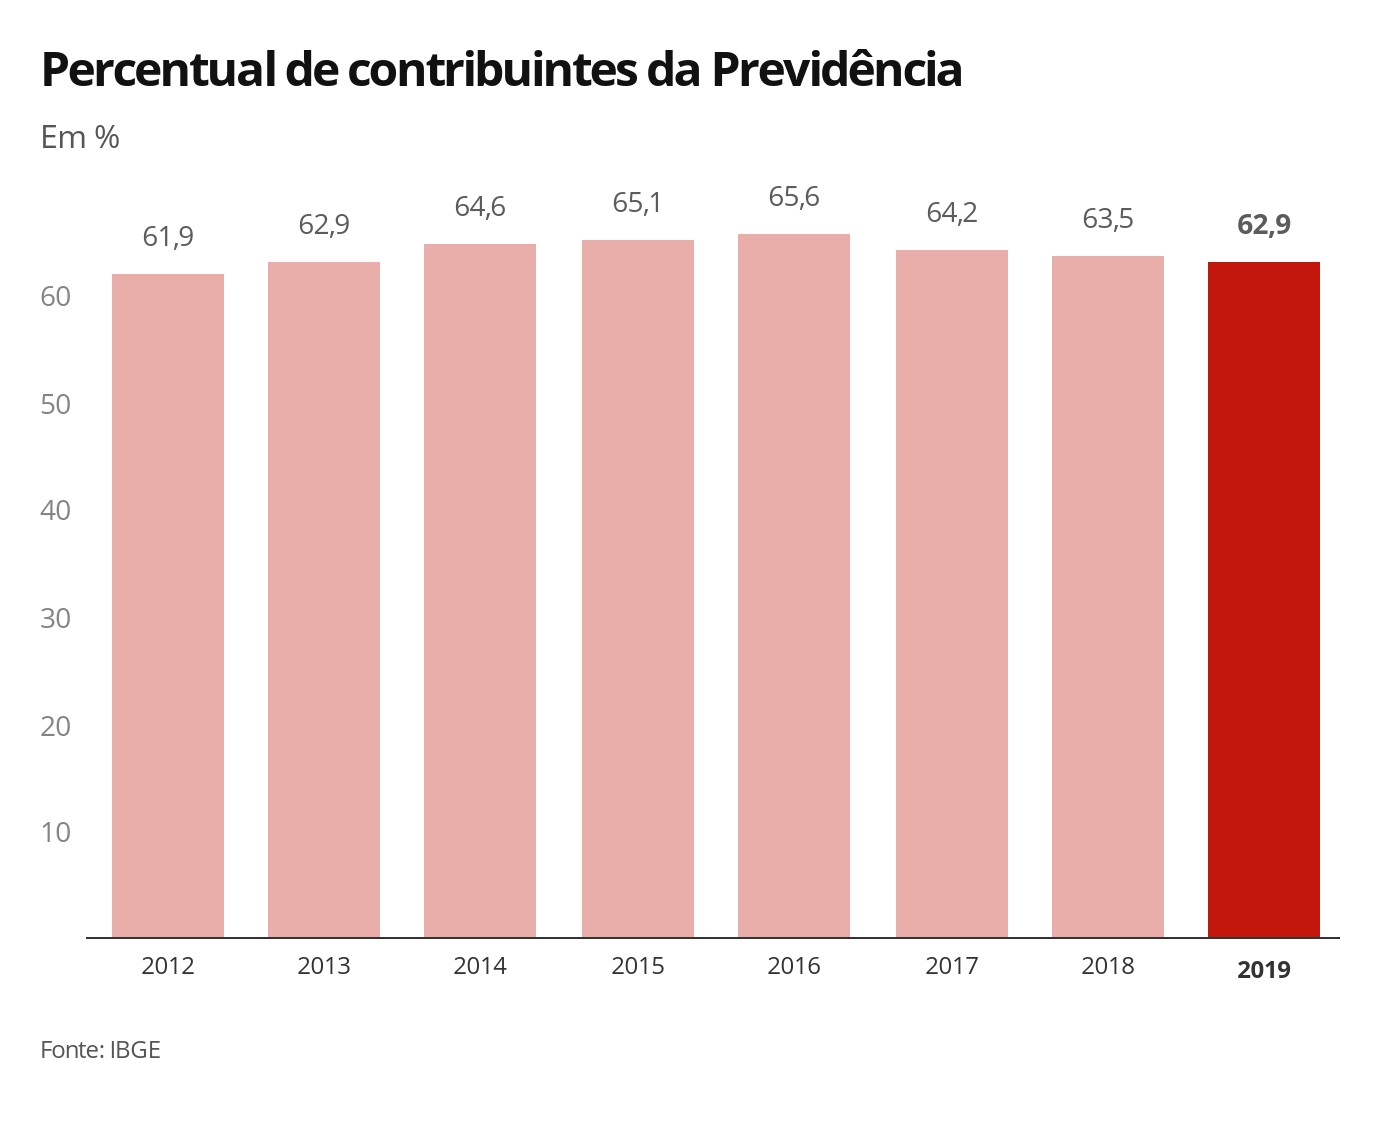 Percentual de contribuintes para Previdência cai pelo 3º ano seguido, aponta IBGE thumbnail